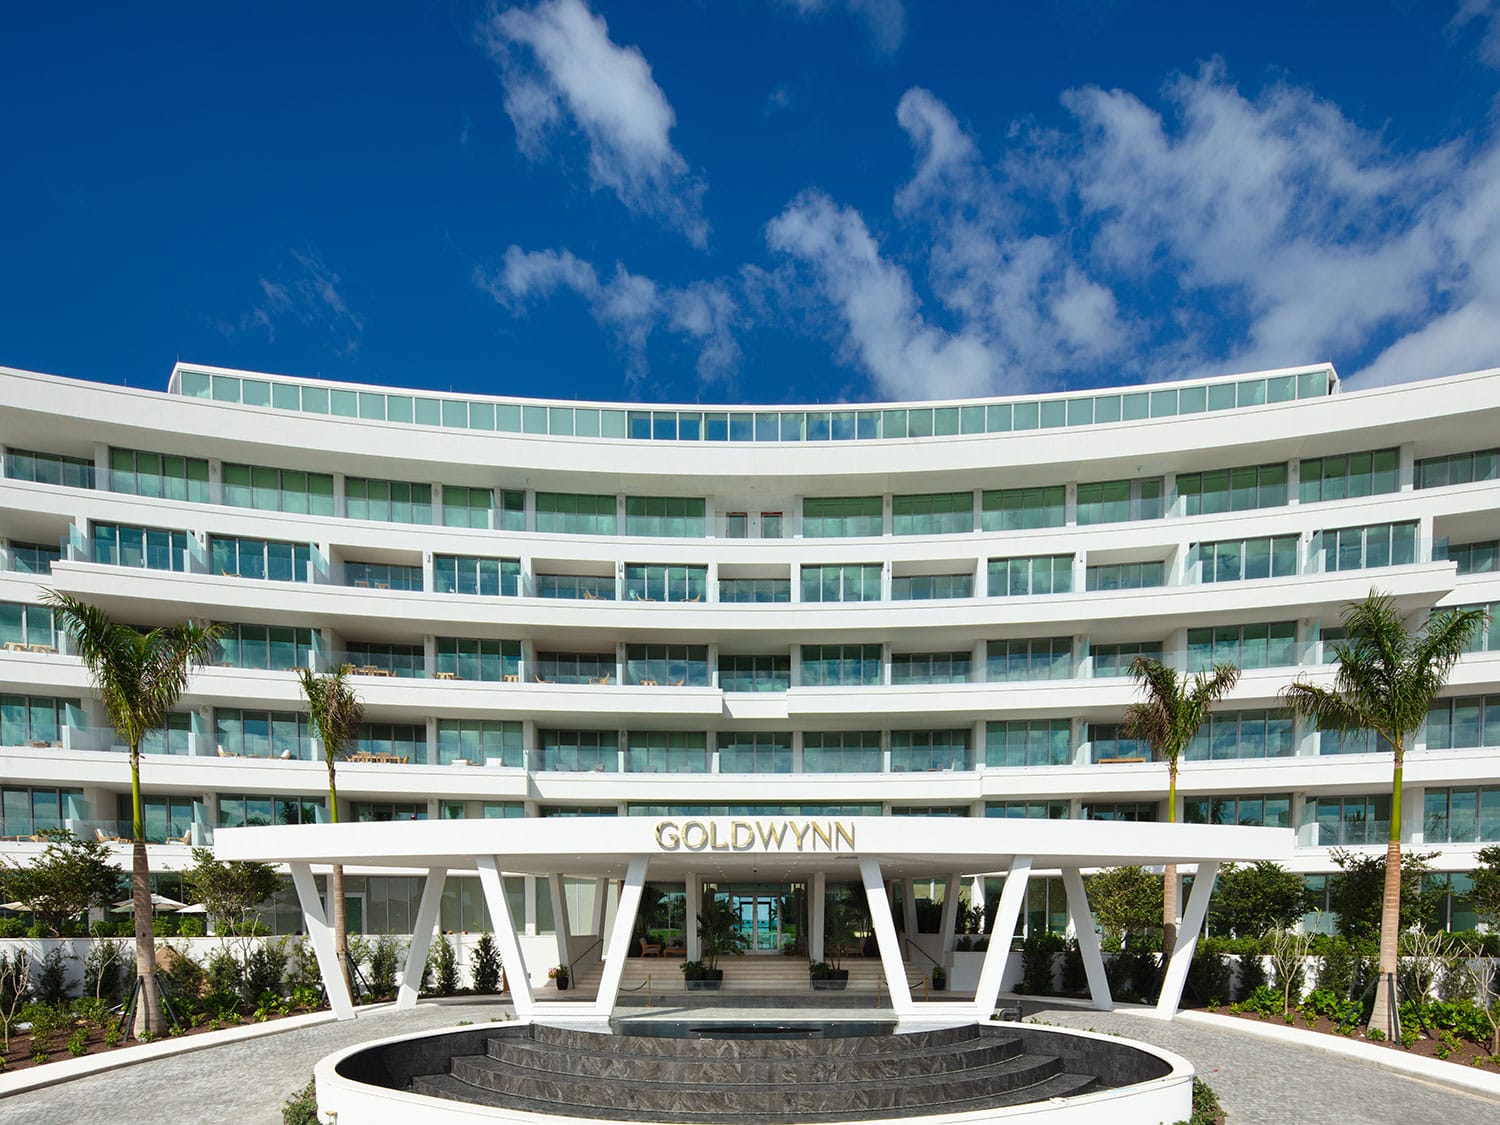 The exterior of the Goldwynn Resort in Nassau, Bahamas.